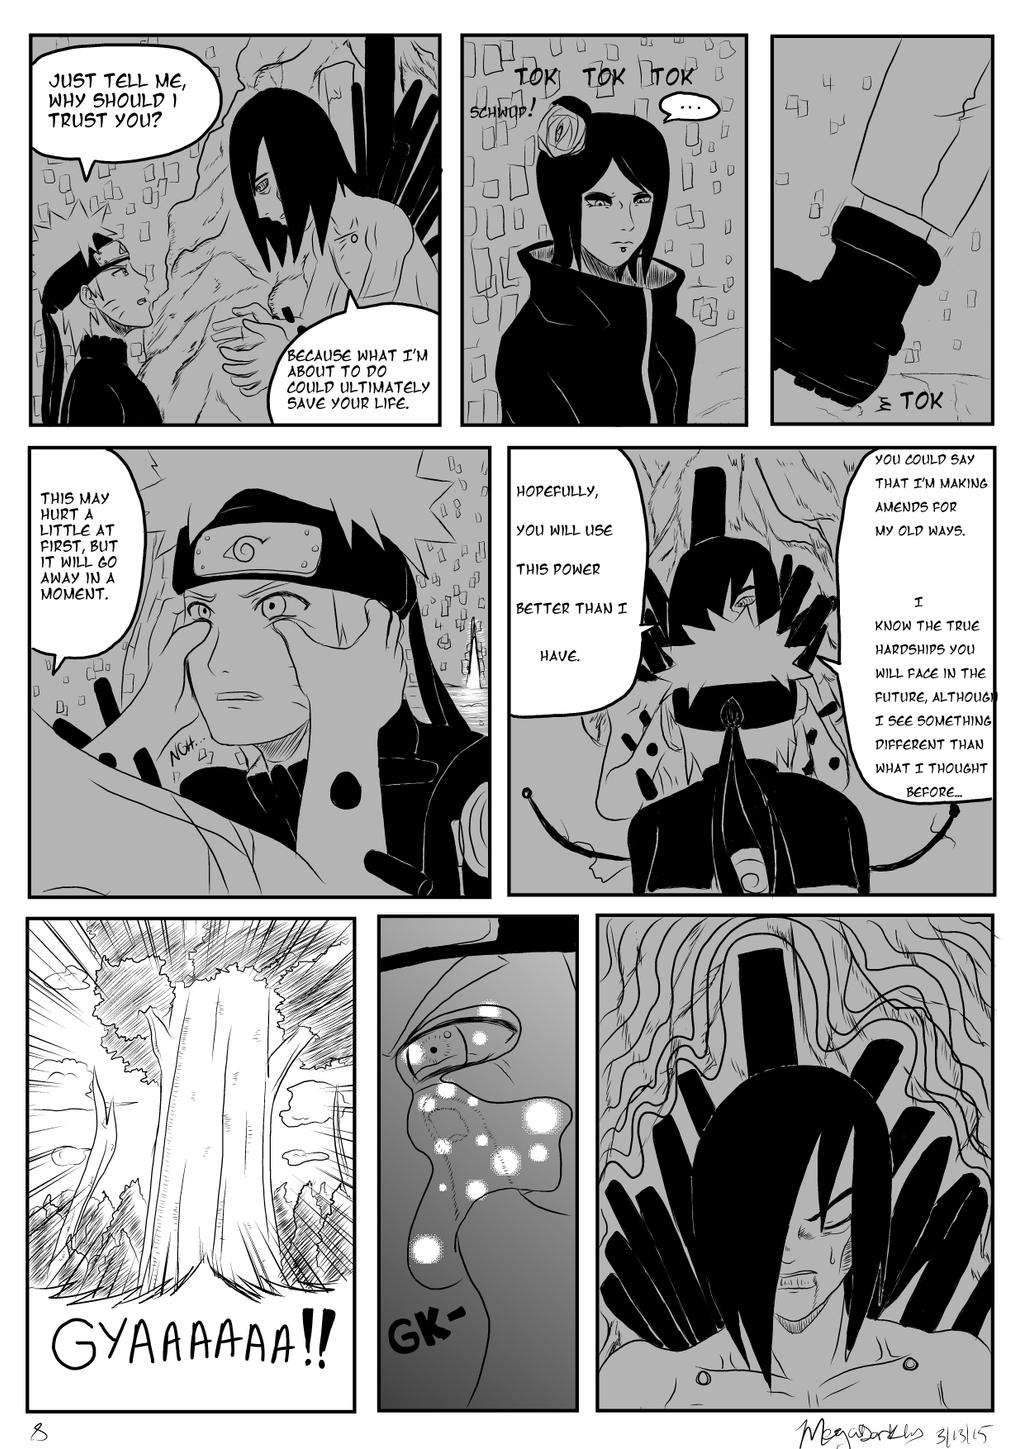 Naruto The Last One Ch1pg8 By Megadarkly On Deviantart